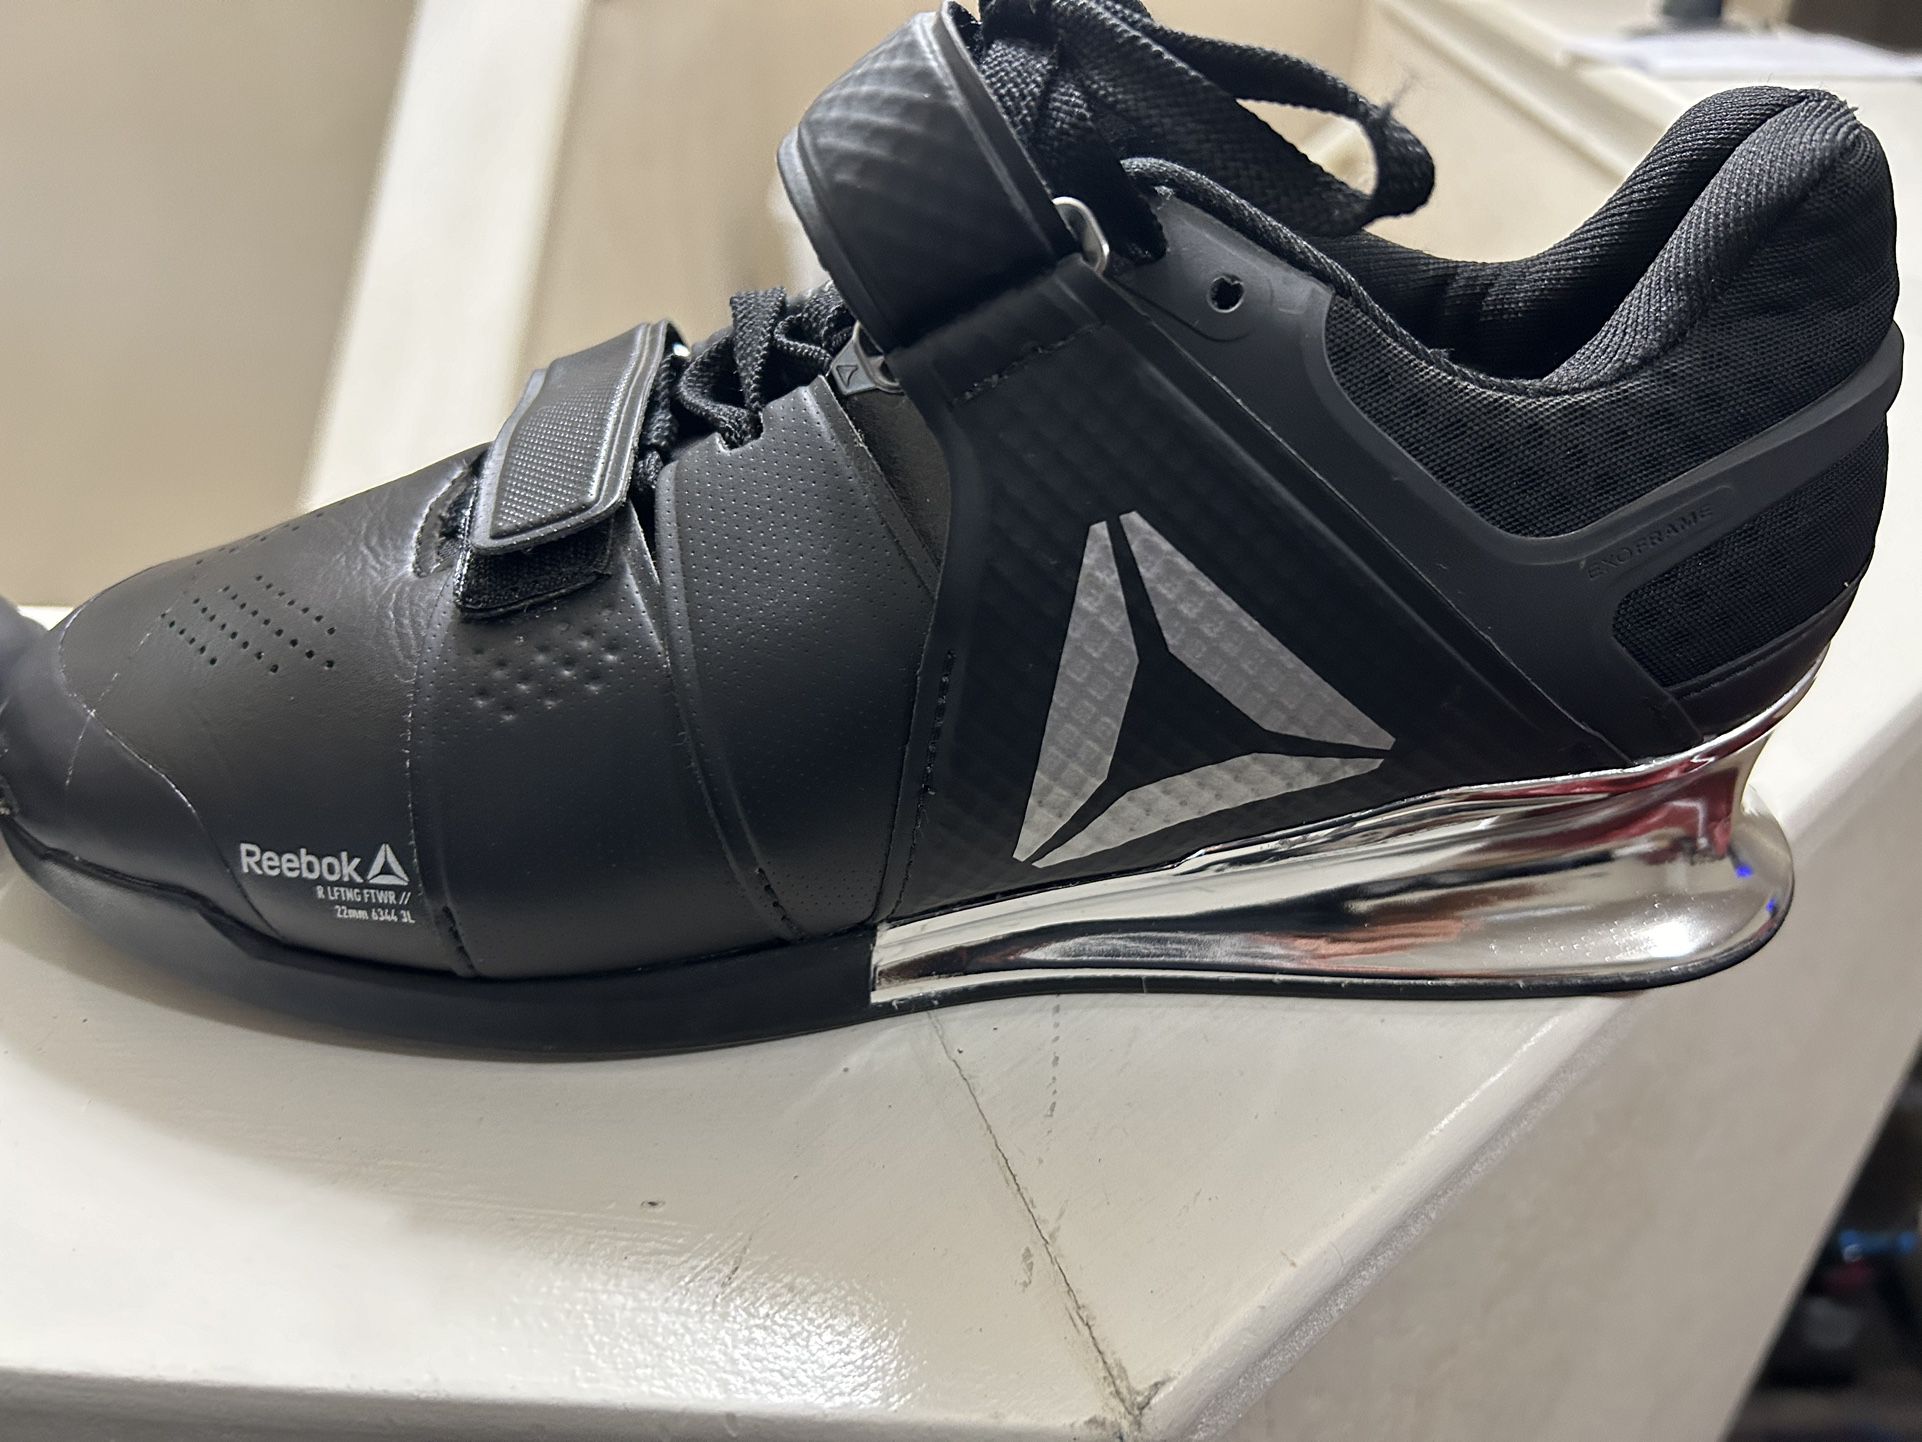 Reebok Men’s Shoes Legacy Lifter CJ Cummings Trainer Lifting Size 10 Black chrome CN1002